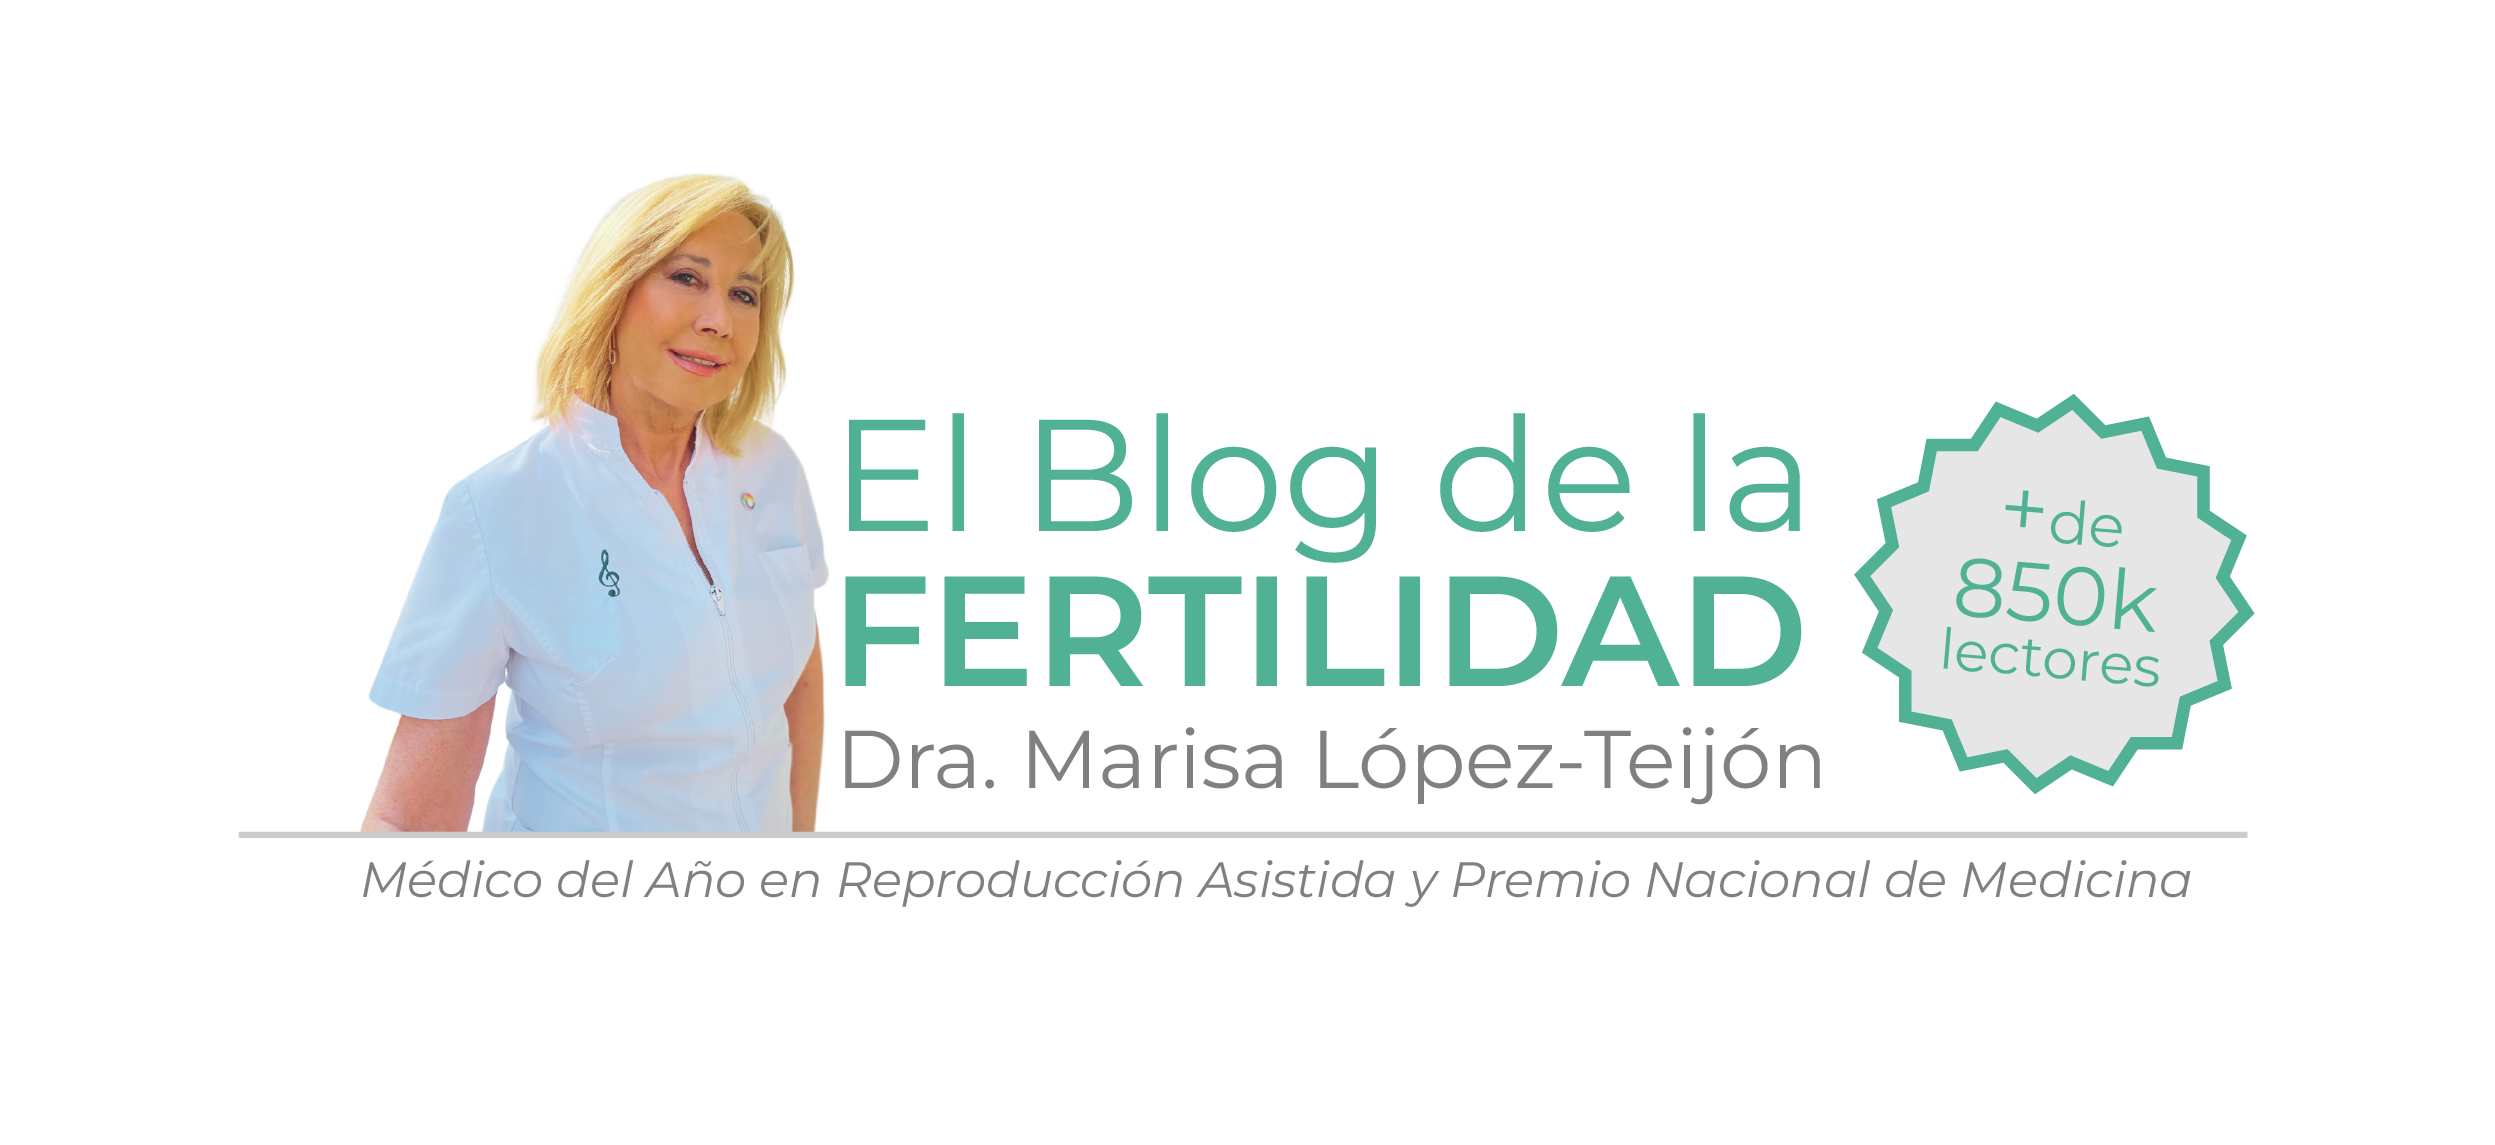 El blog de la fertilidad